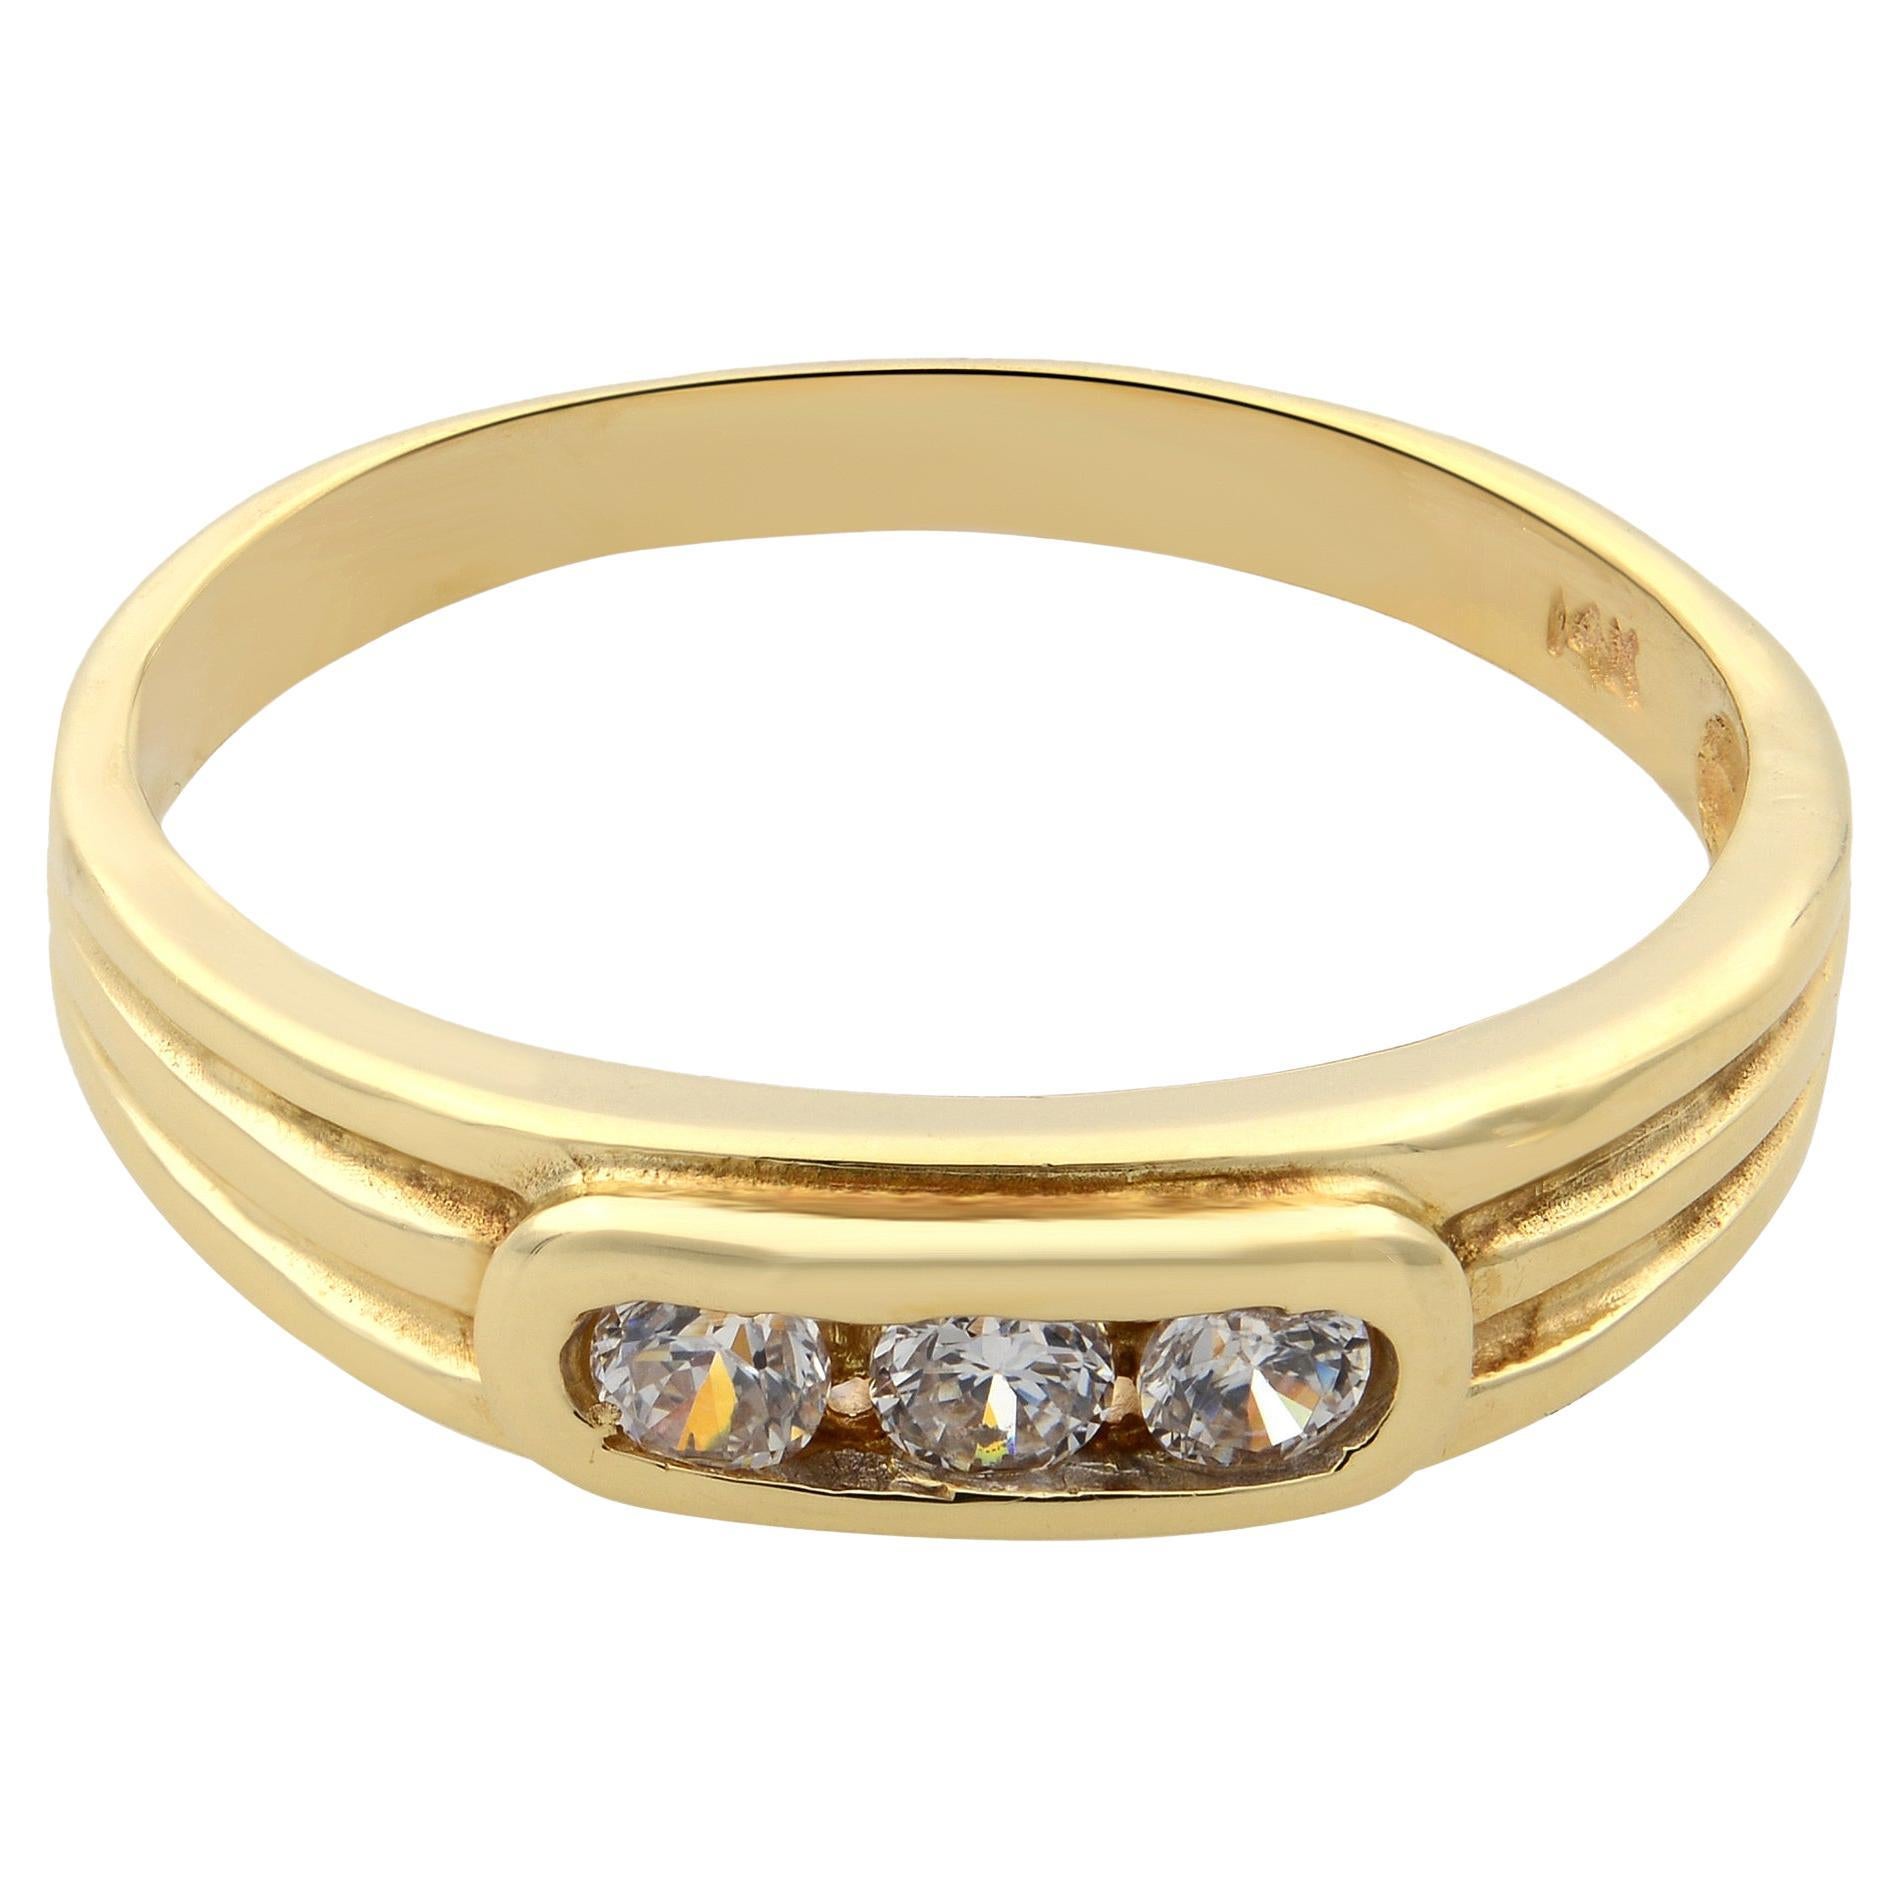 Rachel Koen 0.25Cttw Diamond Ladies Band Ring 14K Yellow Gold Size 9.75 For Sale